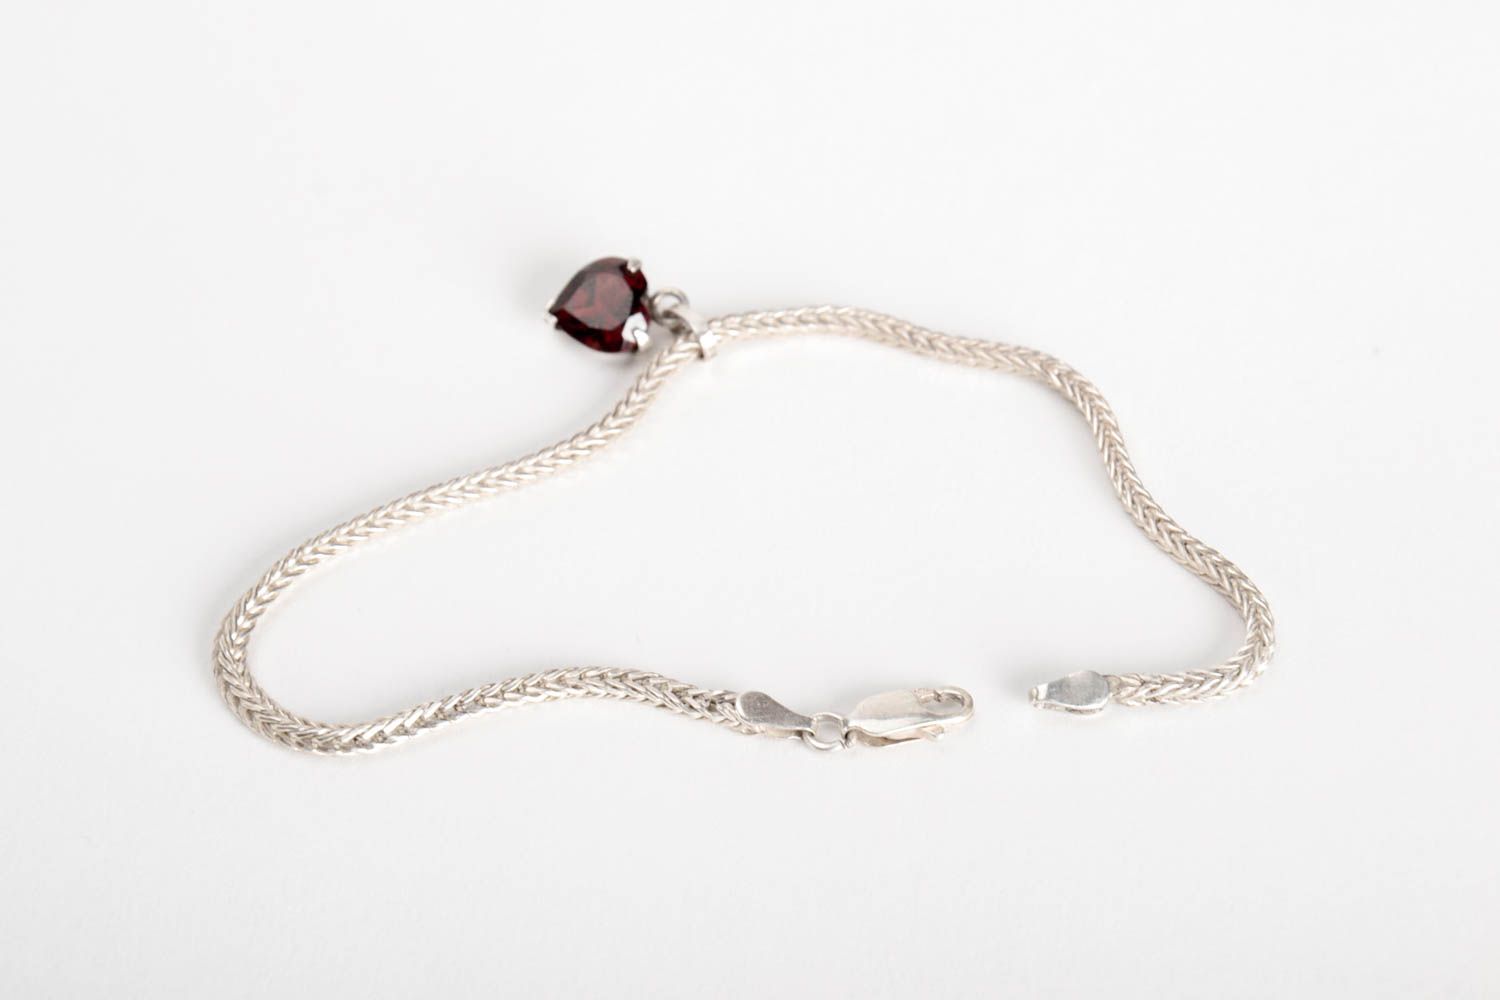 Stylish handmade silver bracelet beautiful jewellery fashion trends gift ideas photo 5